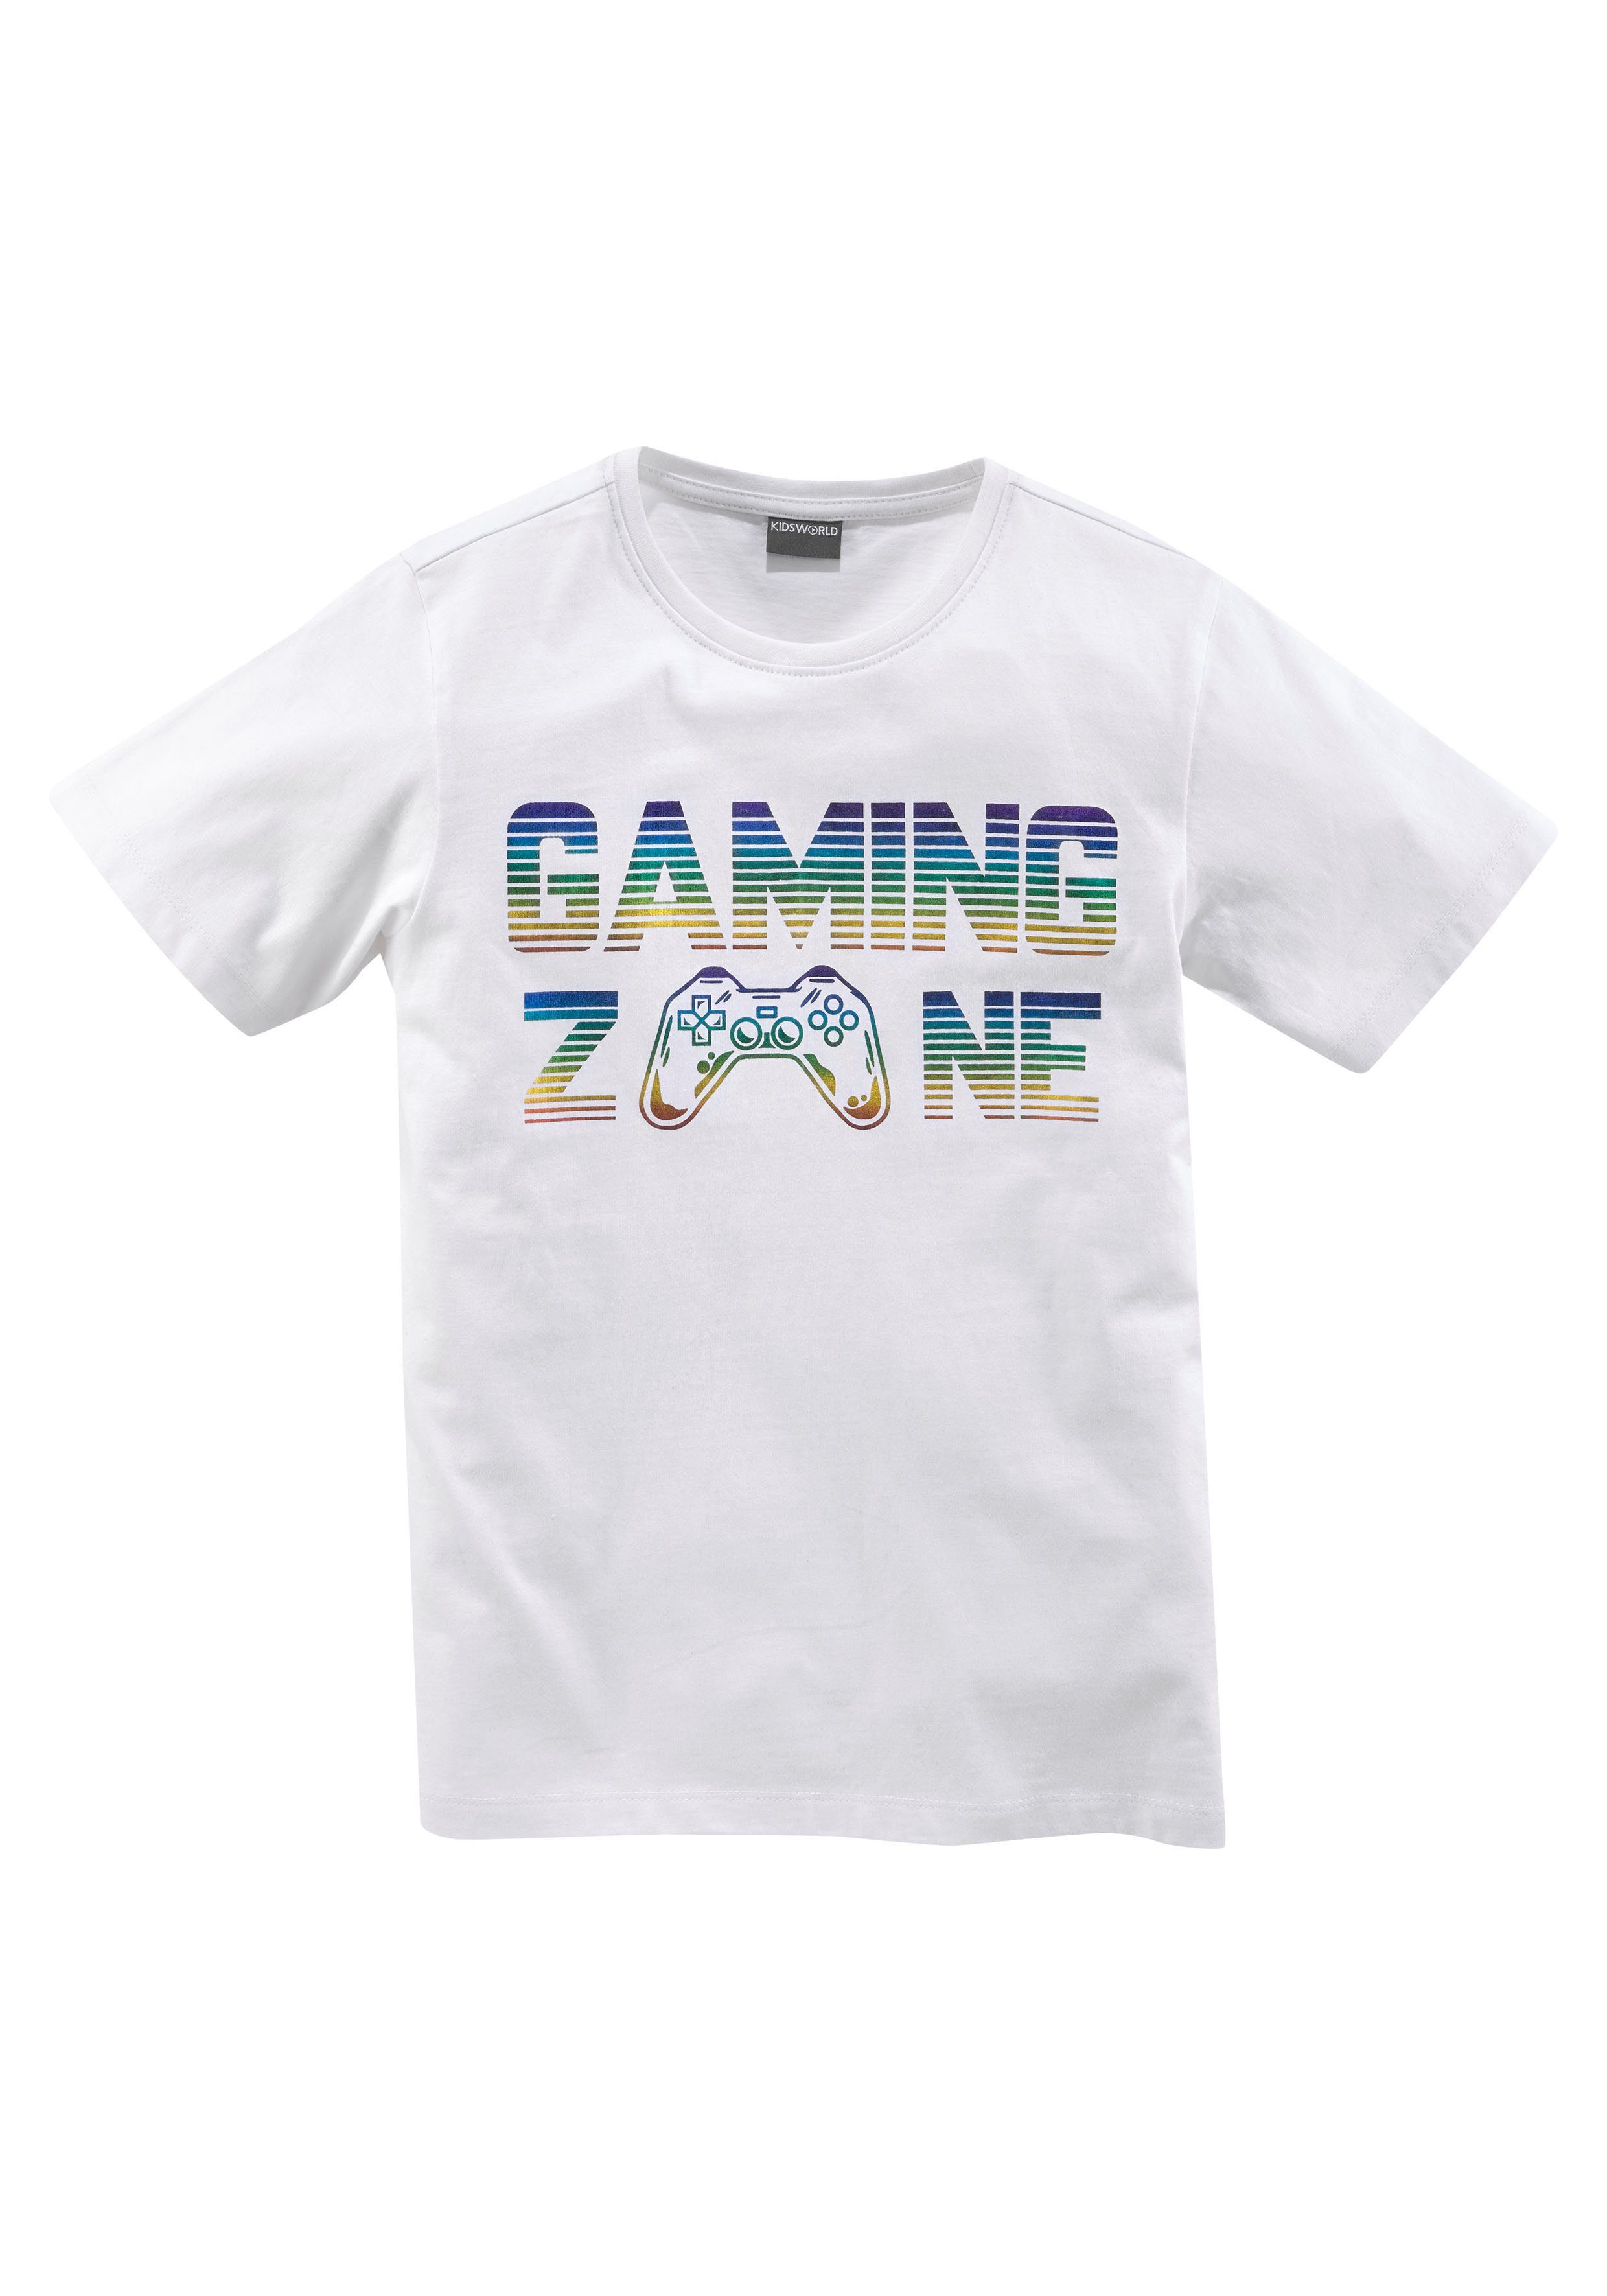 KIDSWORLD T-Shirt GAMING Spruch ZONE